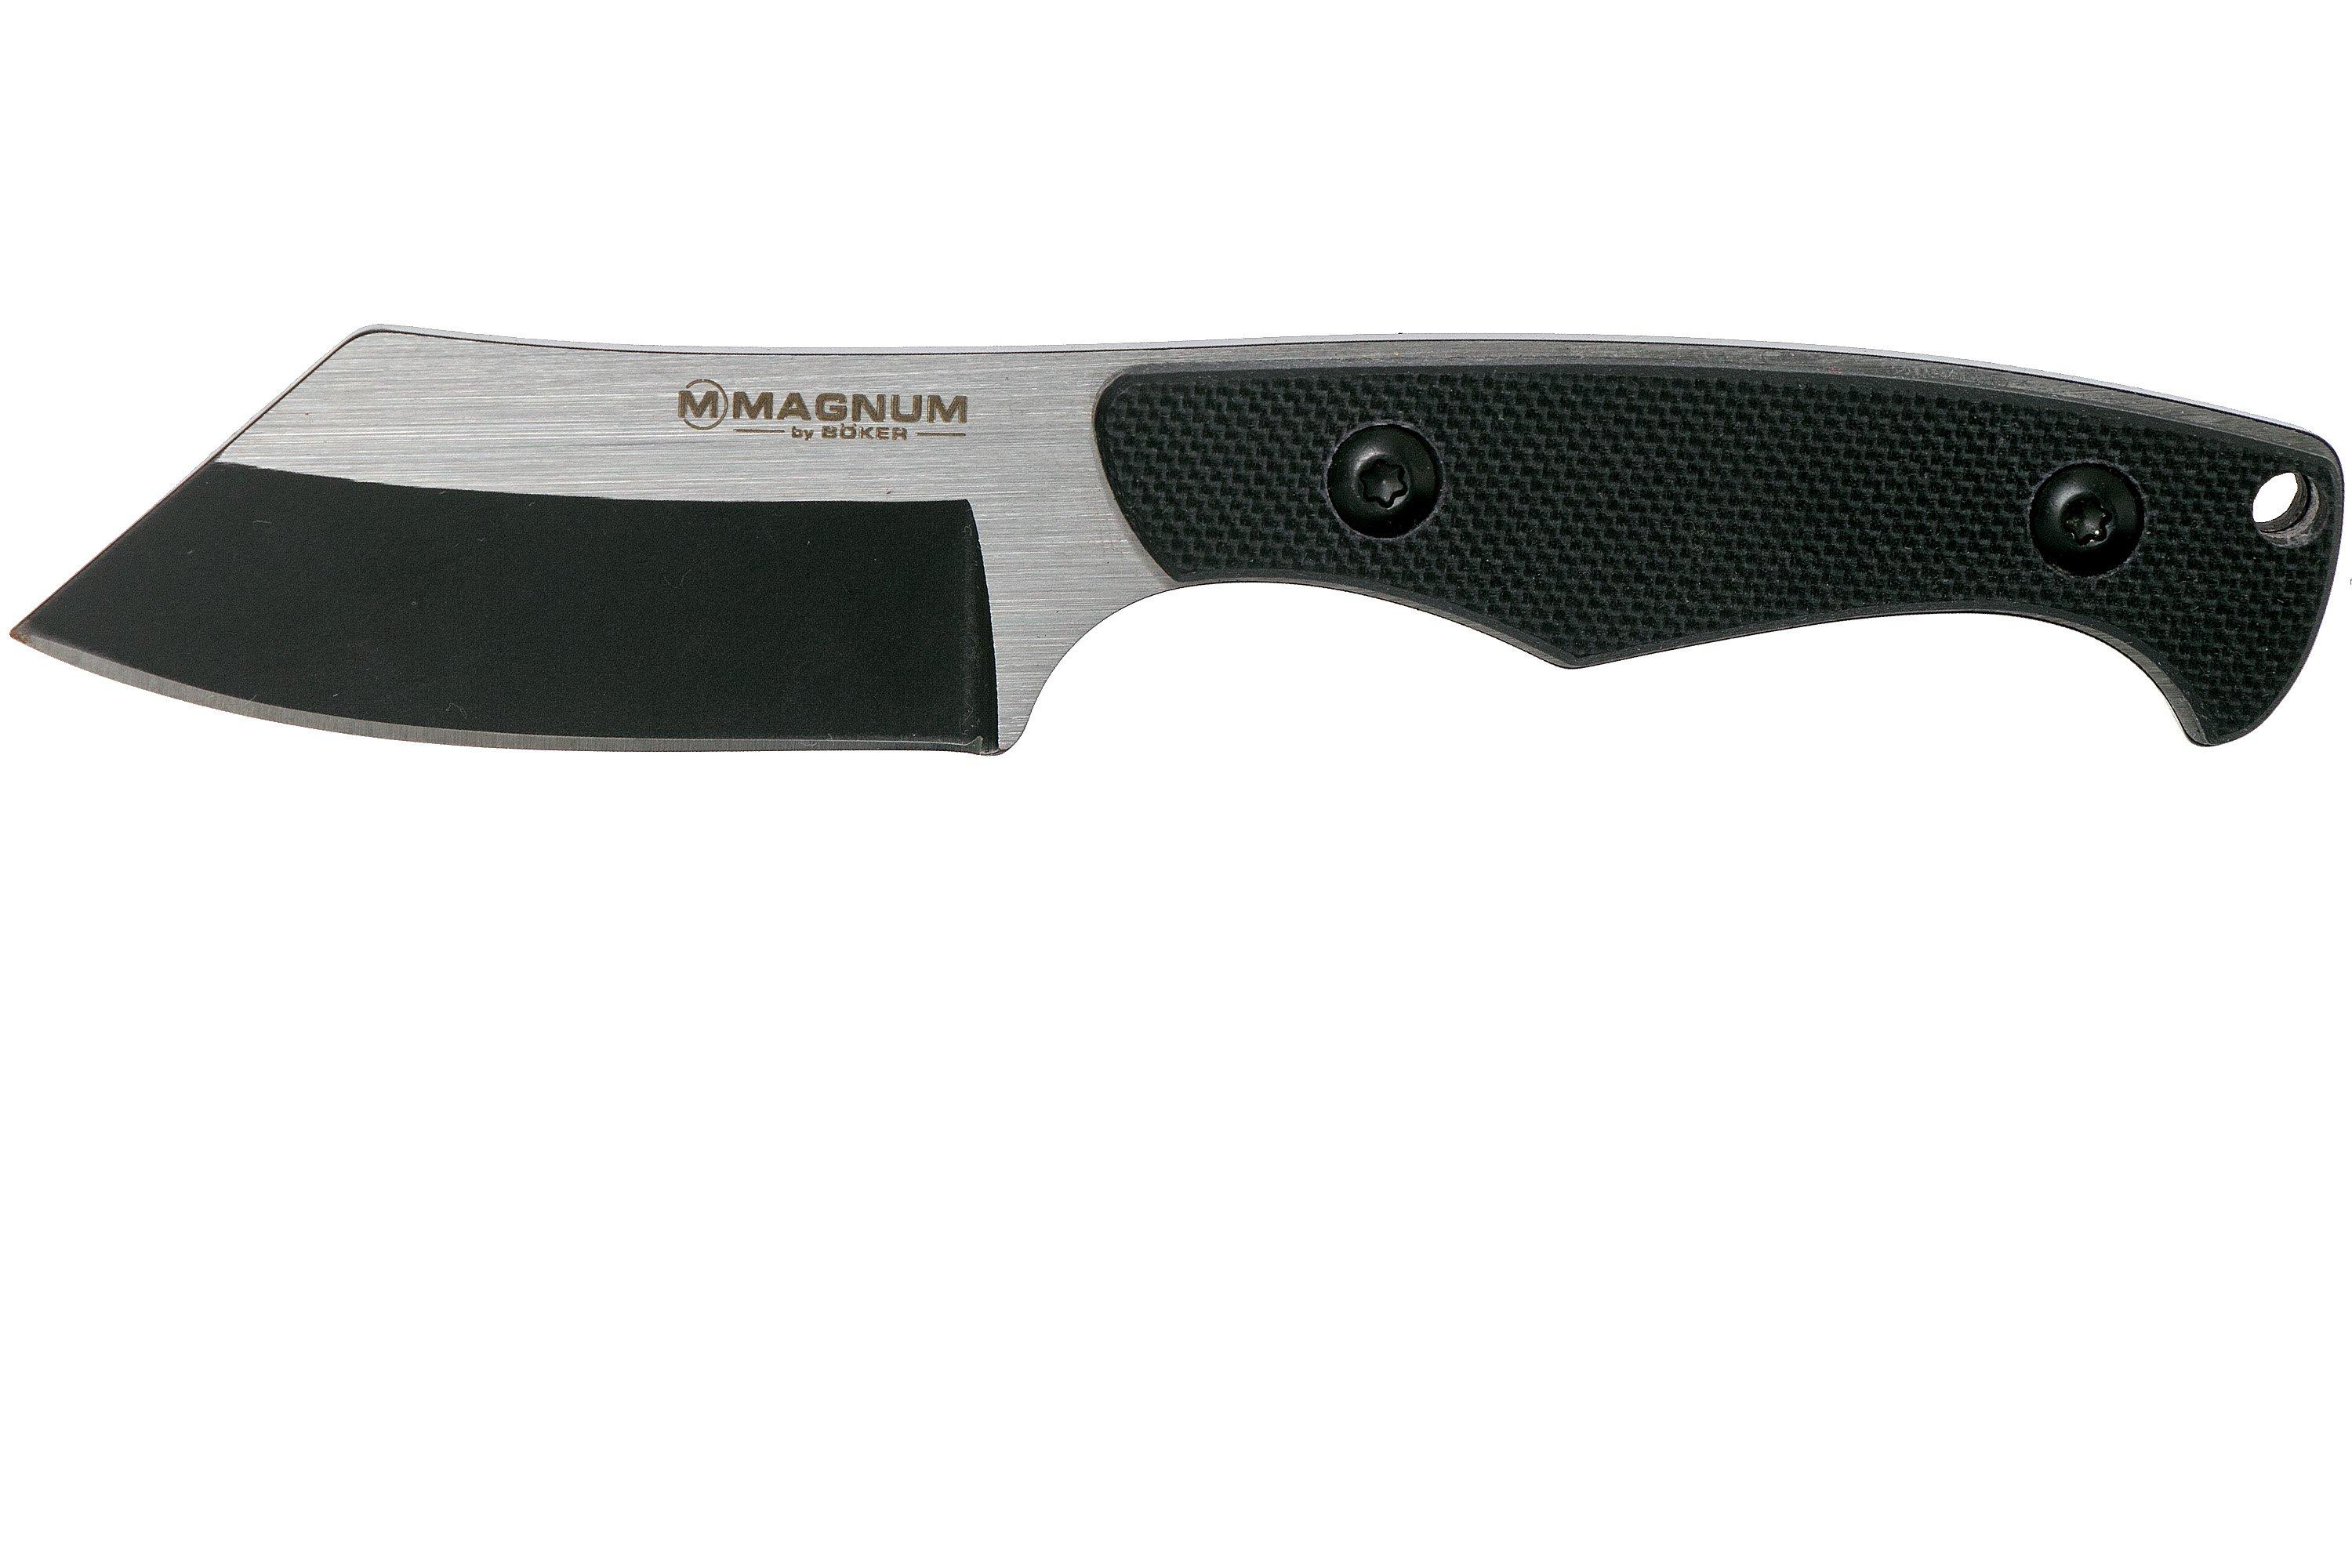 Böker Magnum Challenger 02RY869 neck knife  Advantageously shopping at